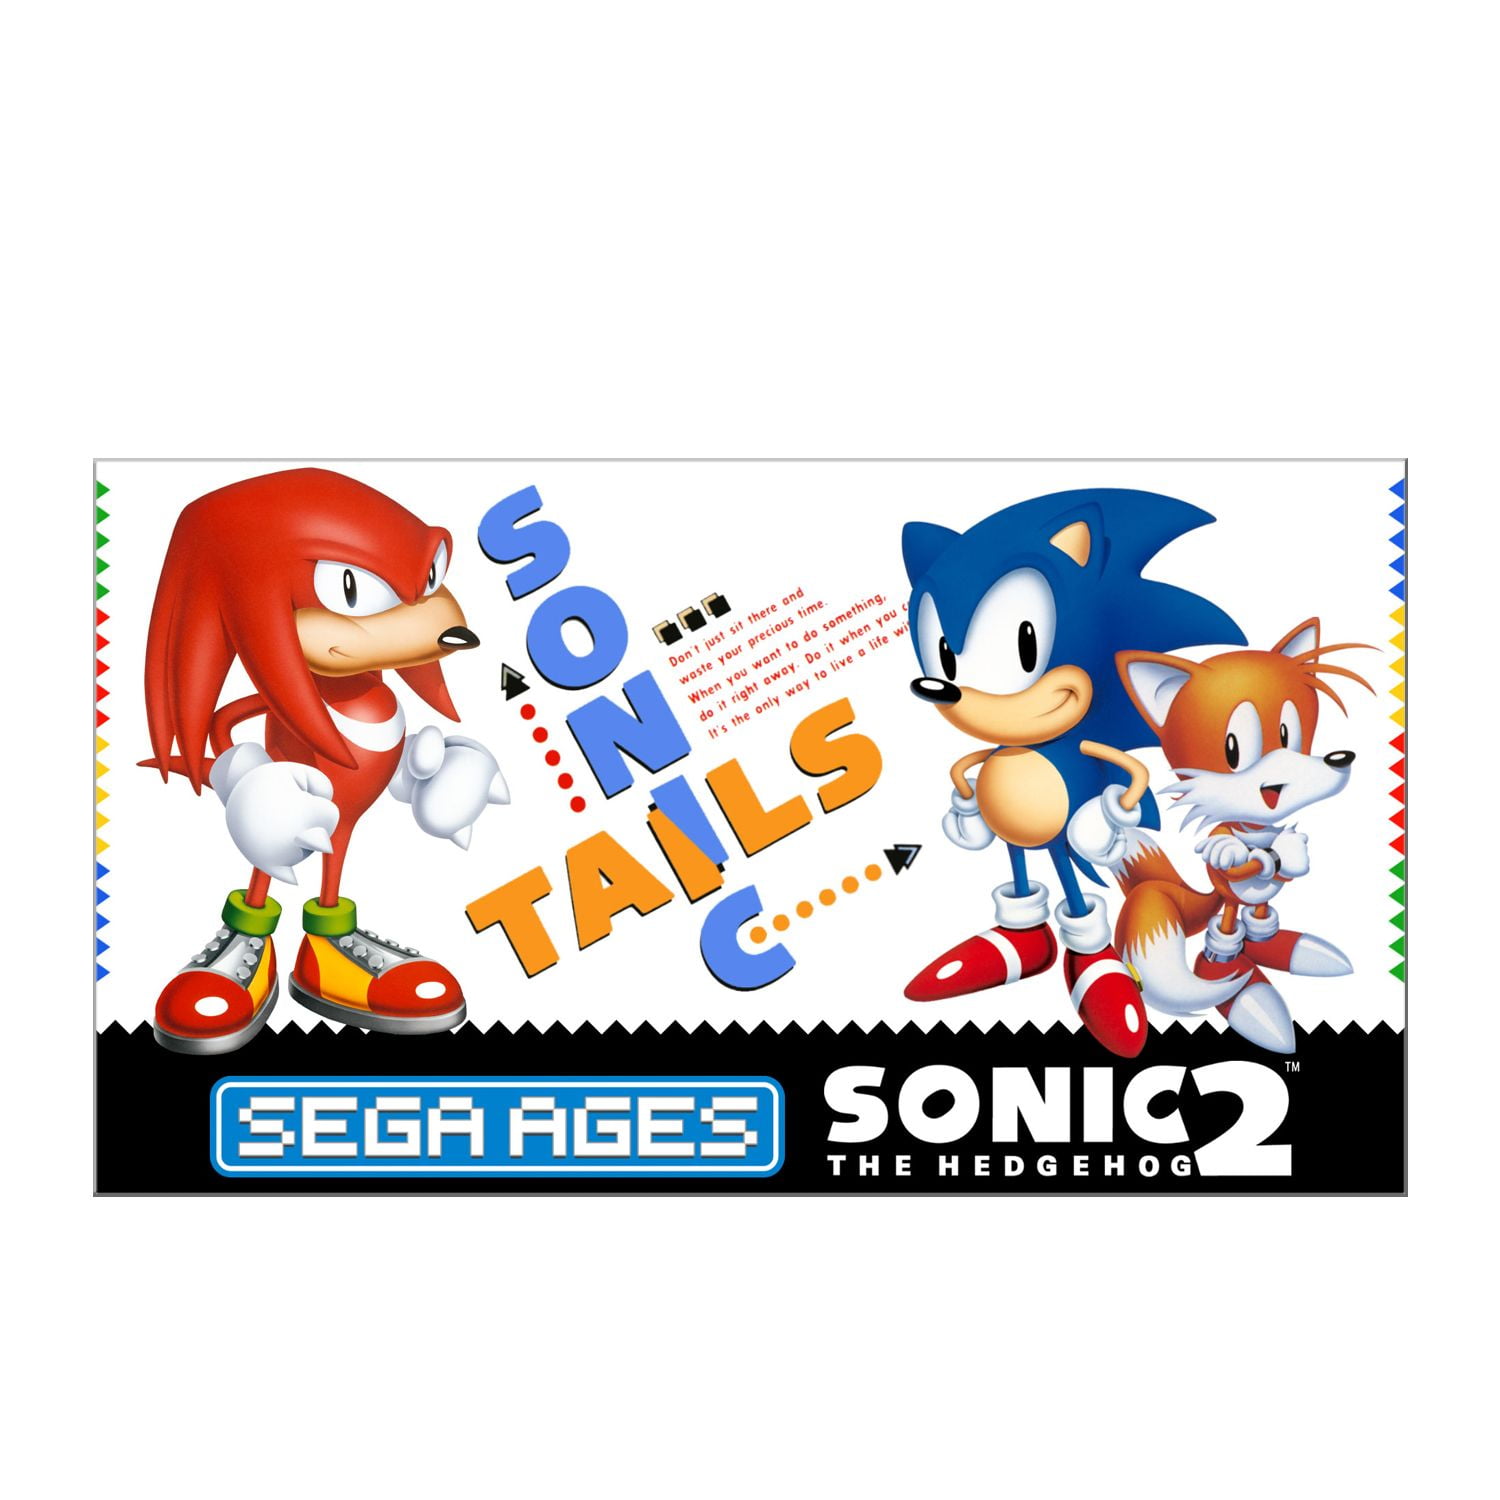 Sonic the Hedgehog 2 Sega. Sonic the Hedgehog NES. Sonic age. Nintendo Switch &Sega. Nintendo age